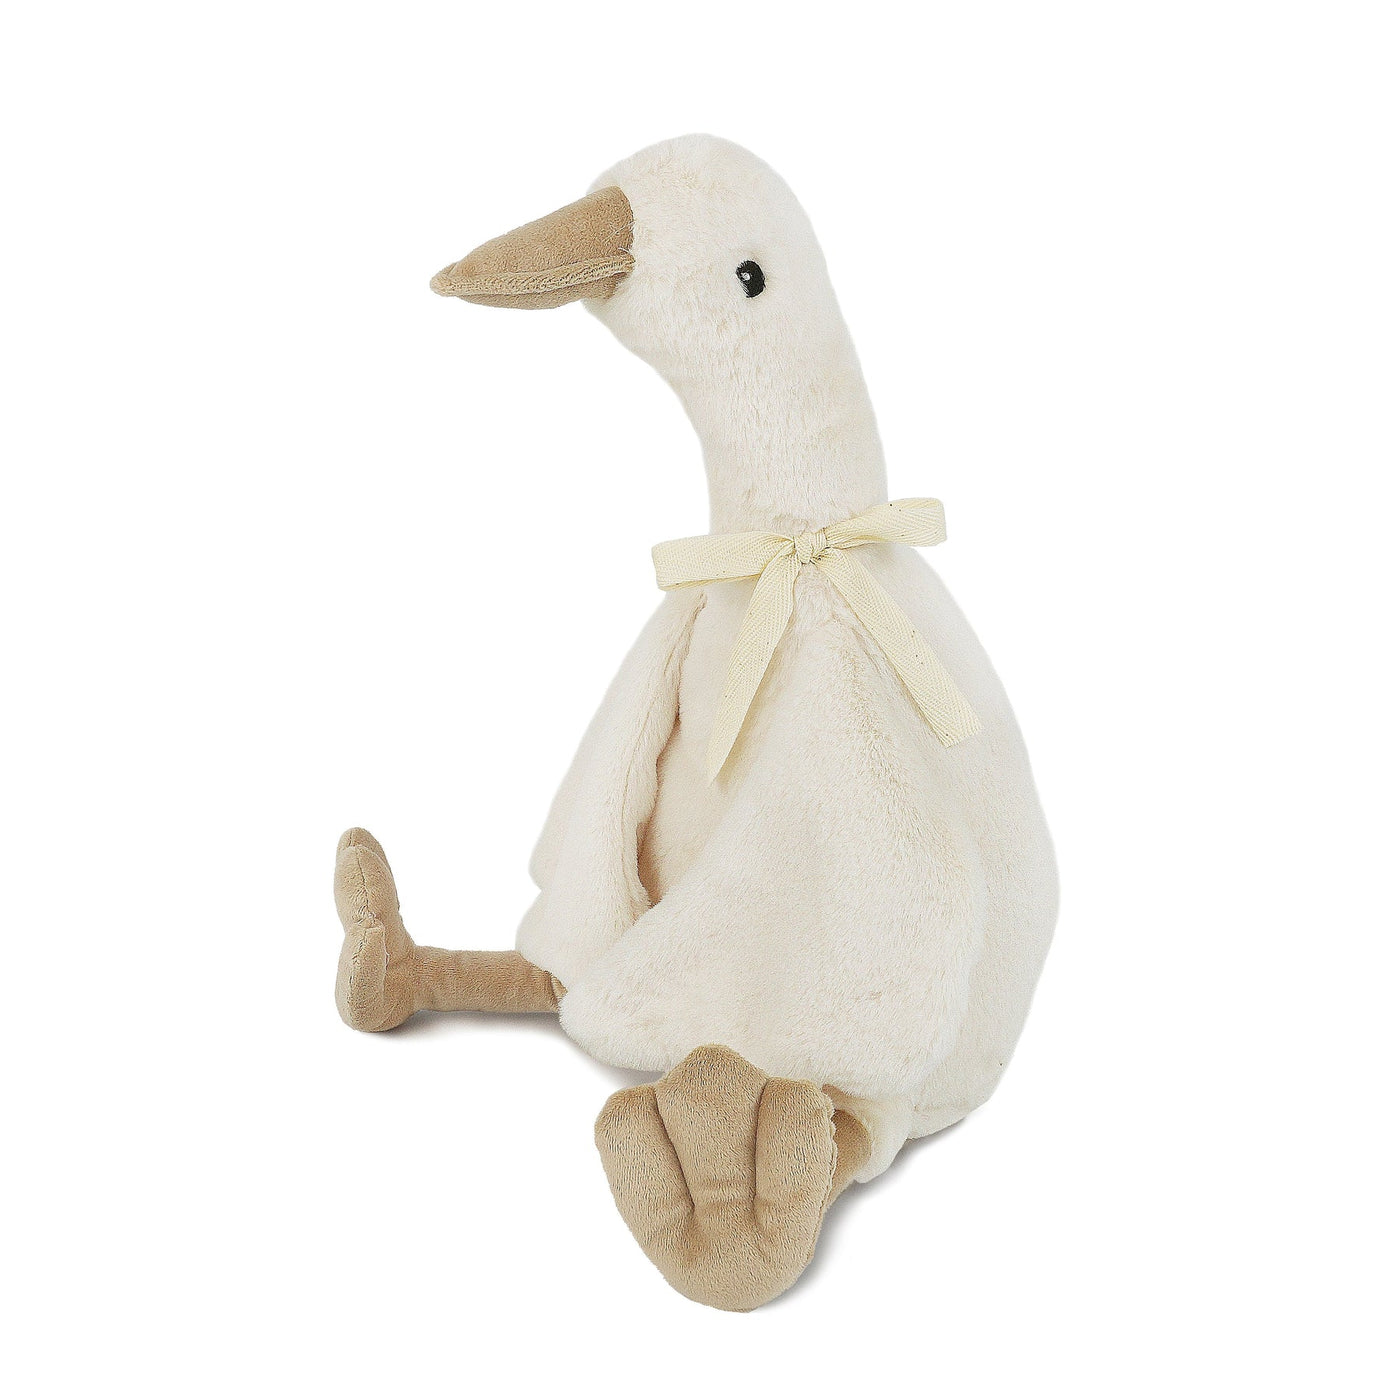 "Pru" the Floppy Goose